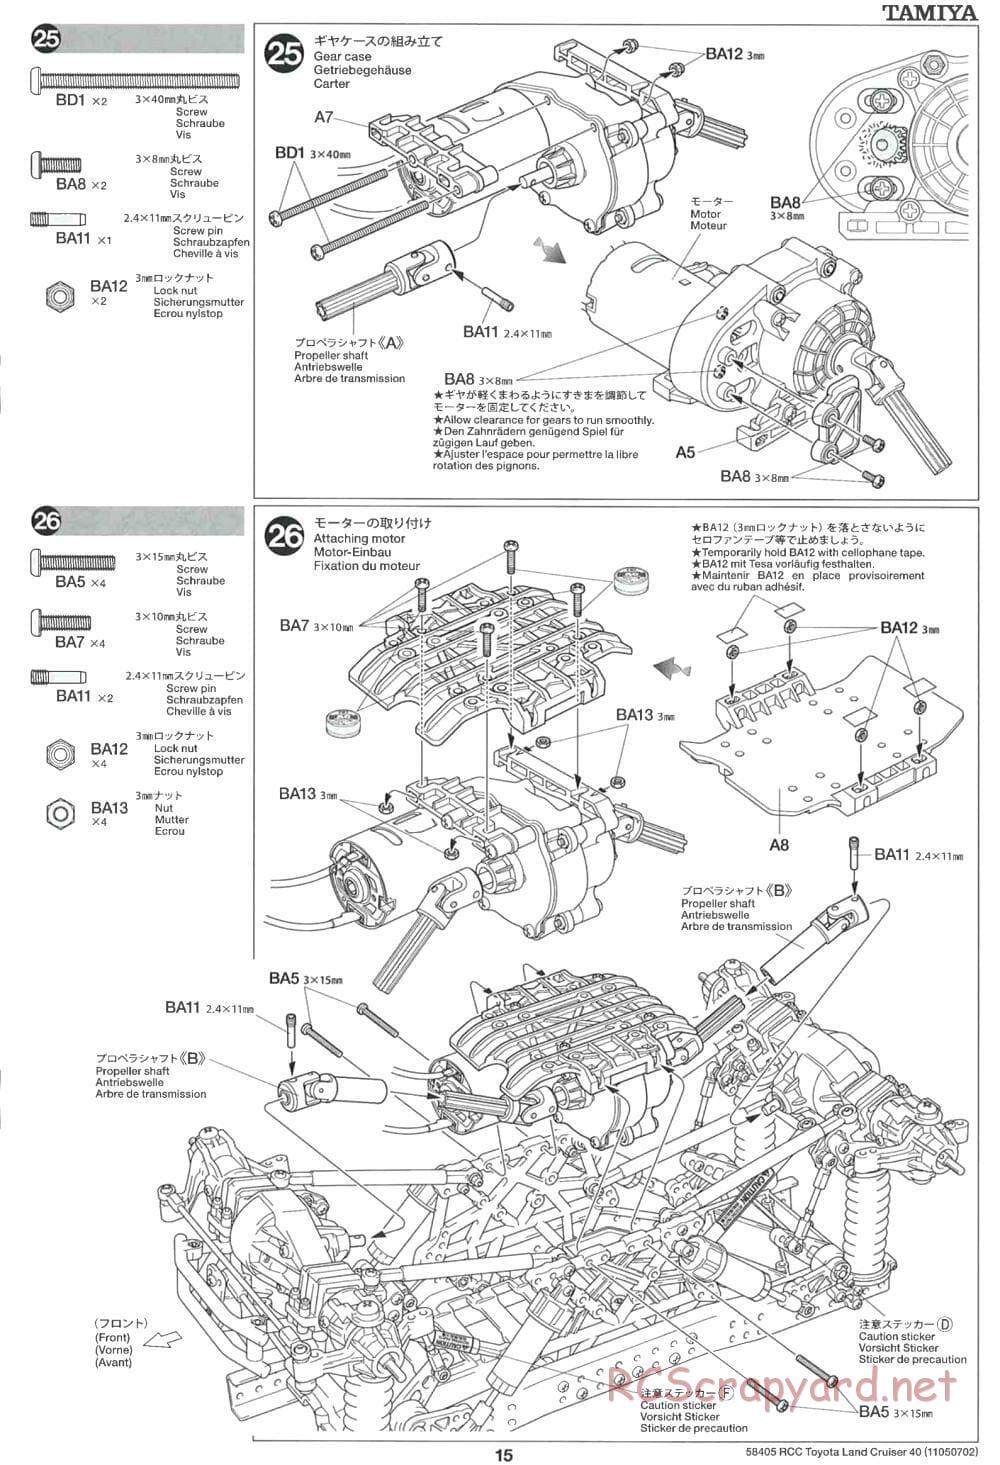 Tamiya - Toyota Land Cruiser 40 - CR-01 Chassis - Manual - Page 15